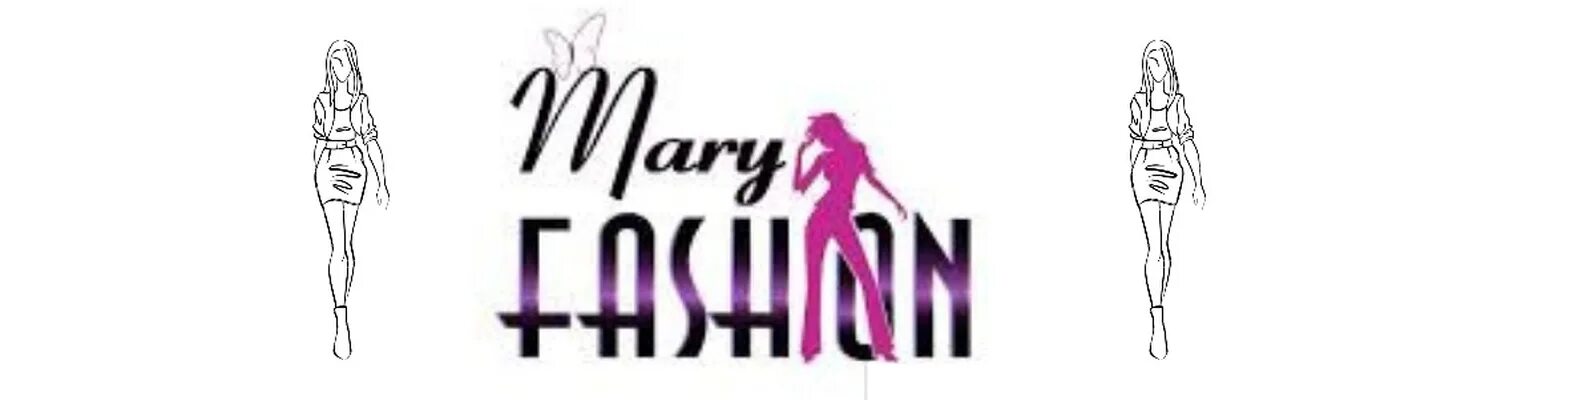 Интернет магазин maria. Maryam Fashion лого. Mari shop logo.